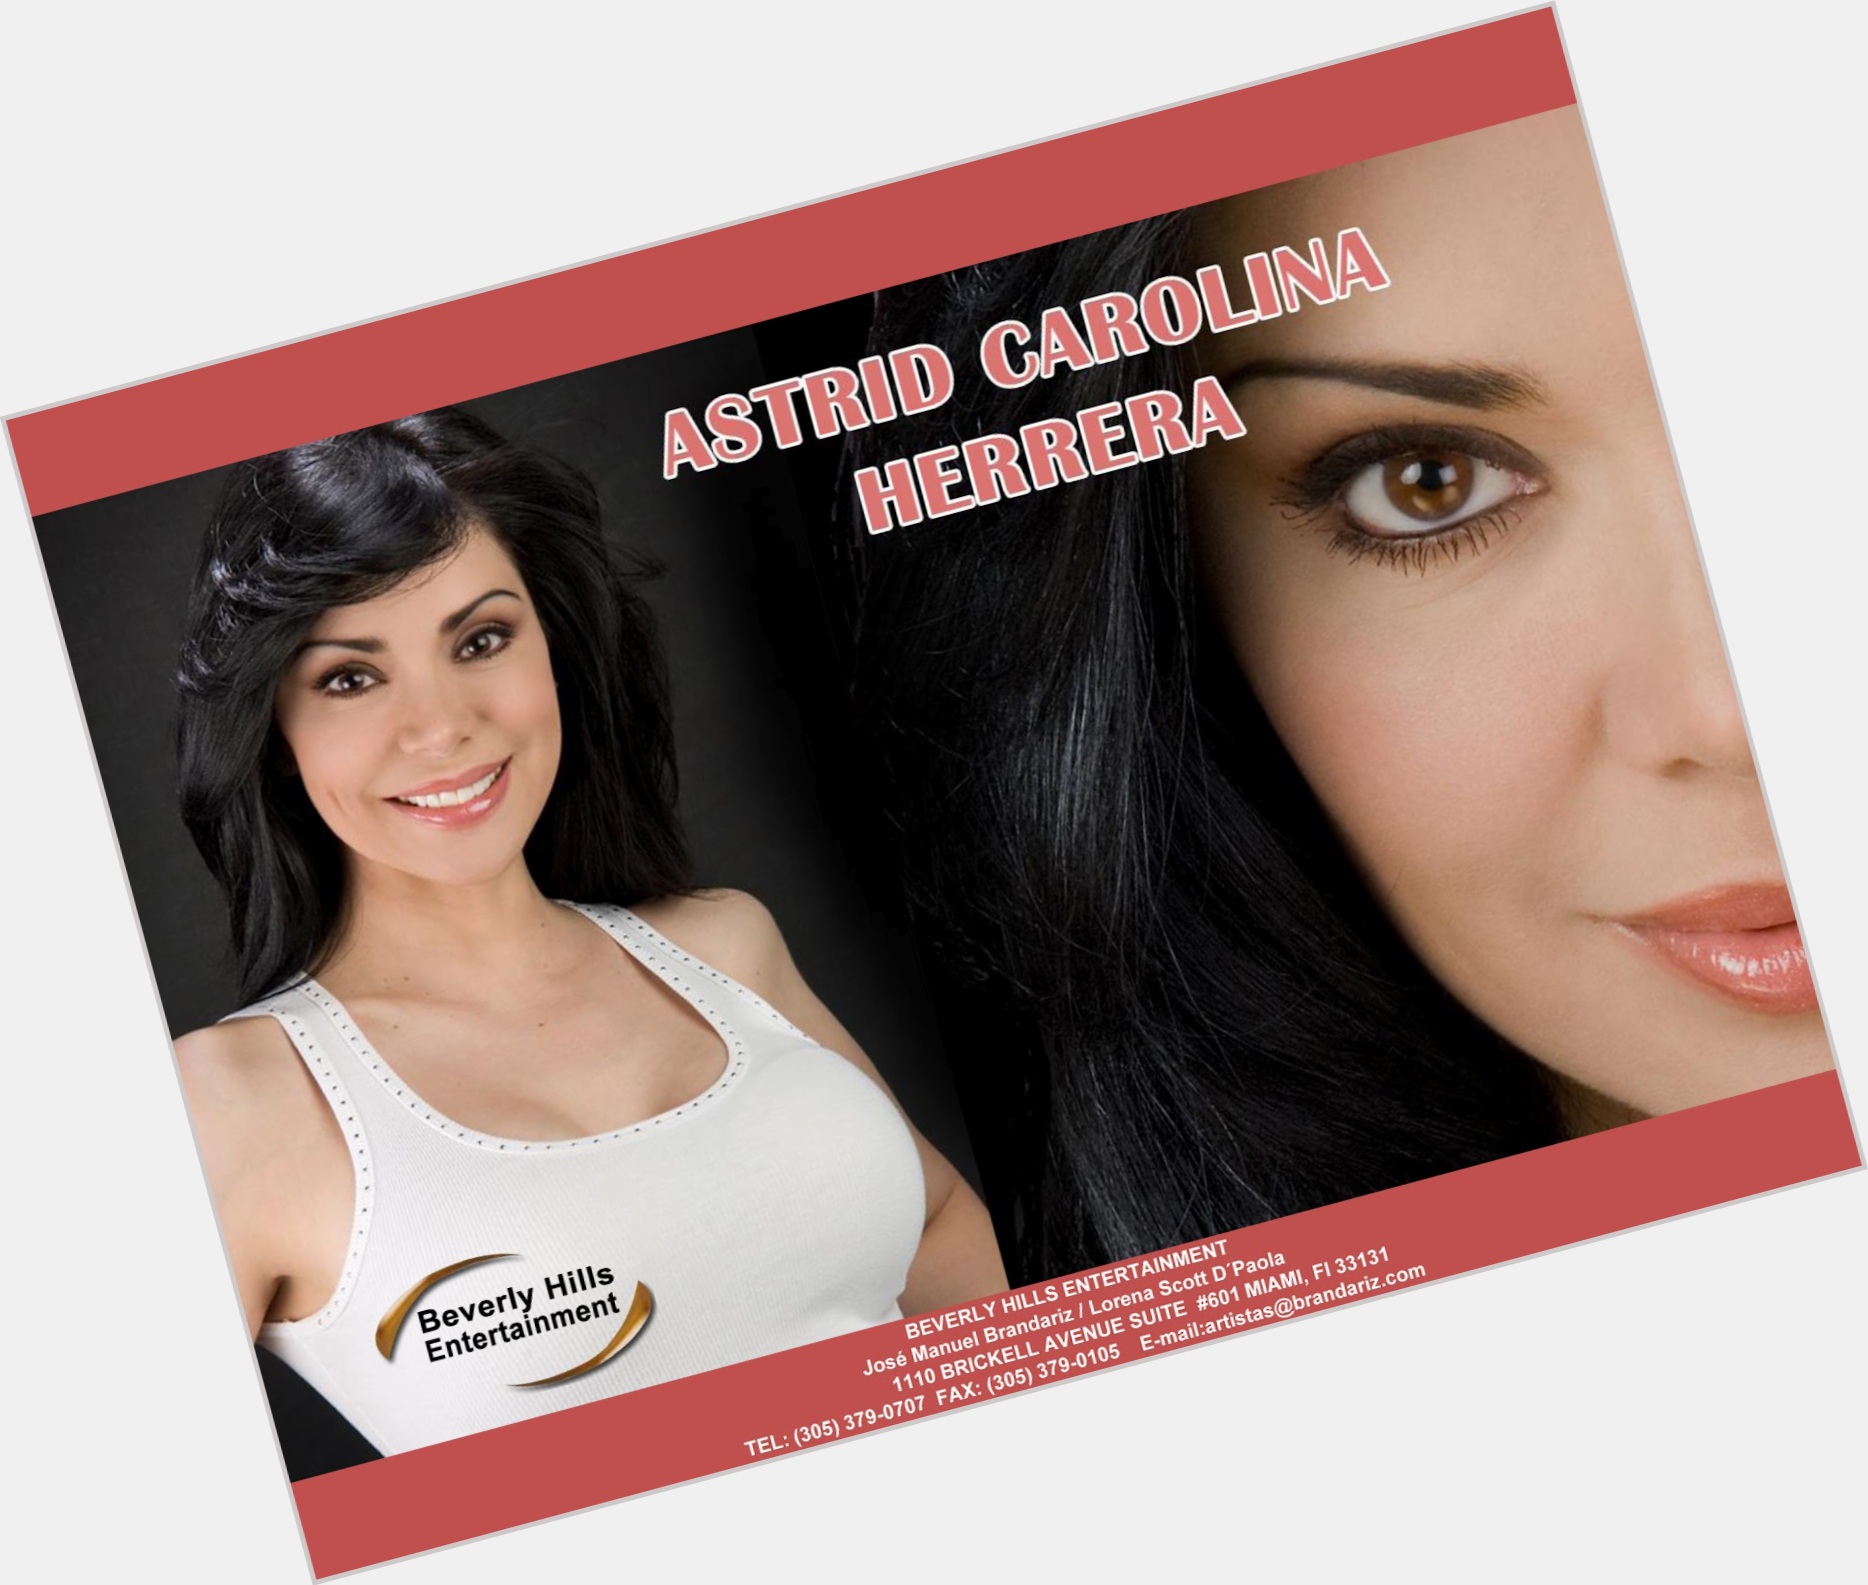 Astrid Carolina Herrera gay 5